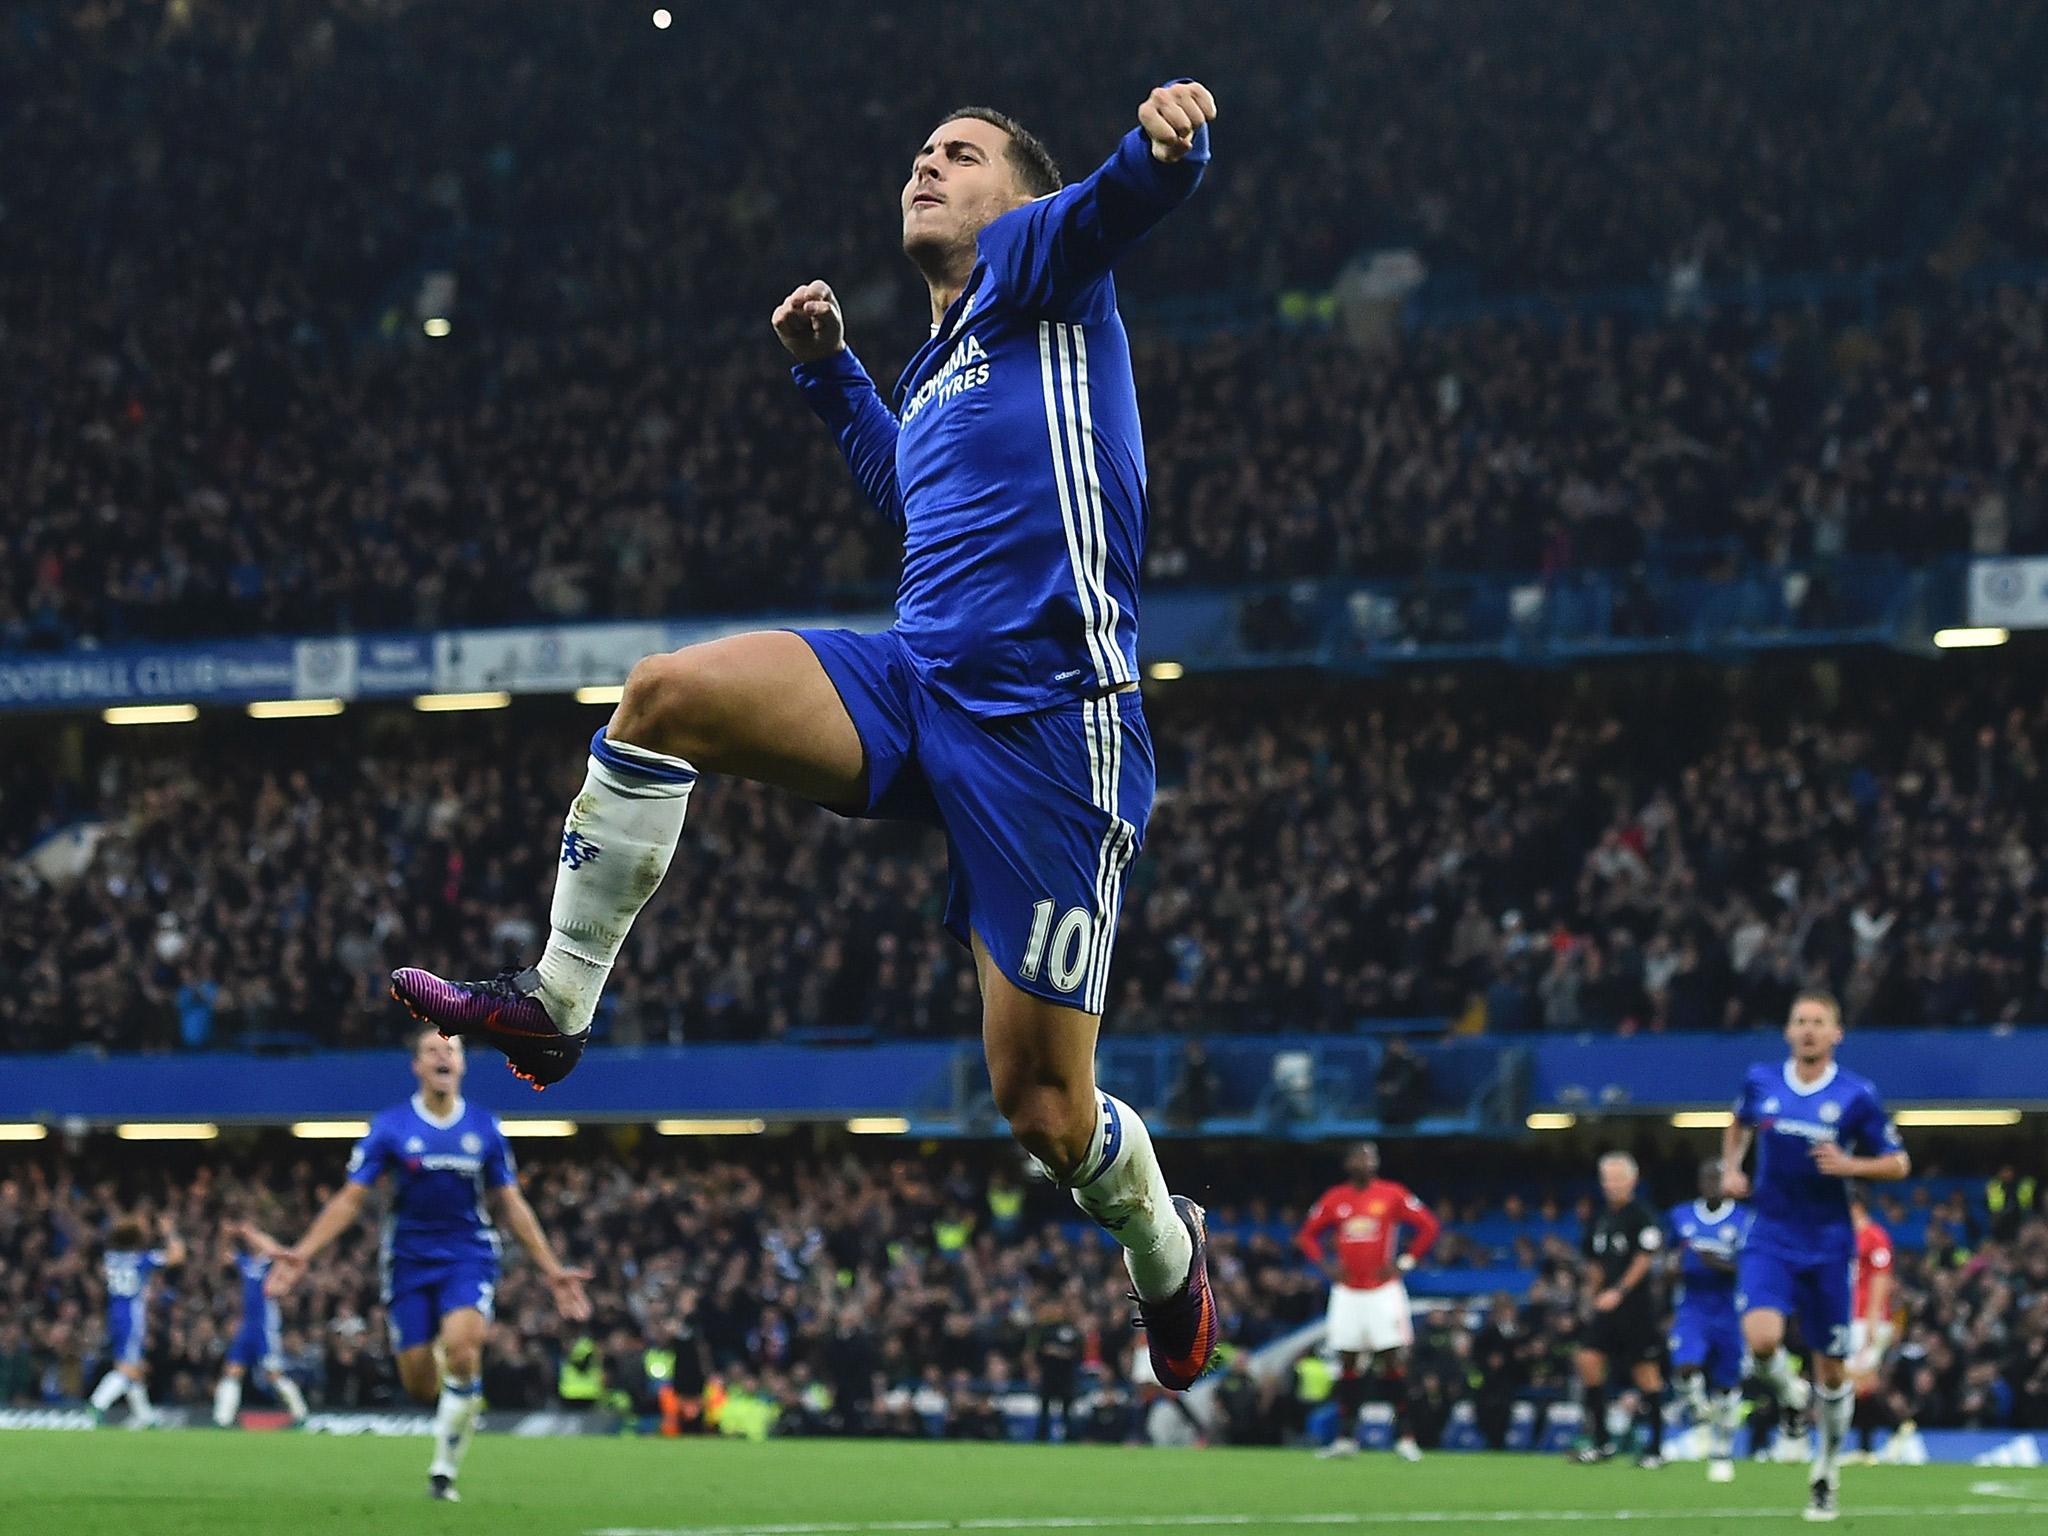 Eden hazard celebrates scoring Chelsea's third goal against Manchester United